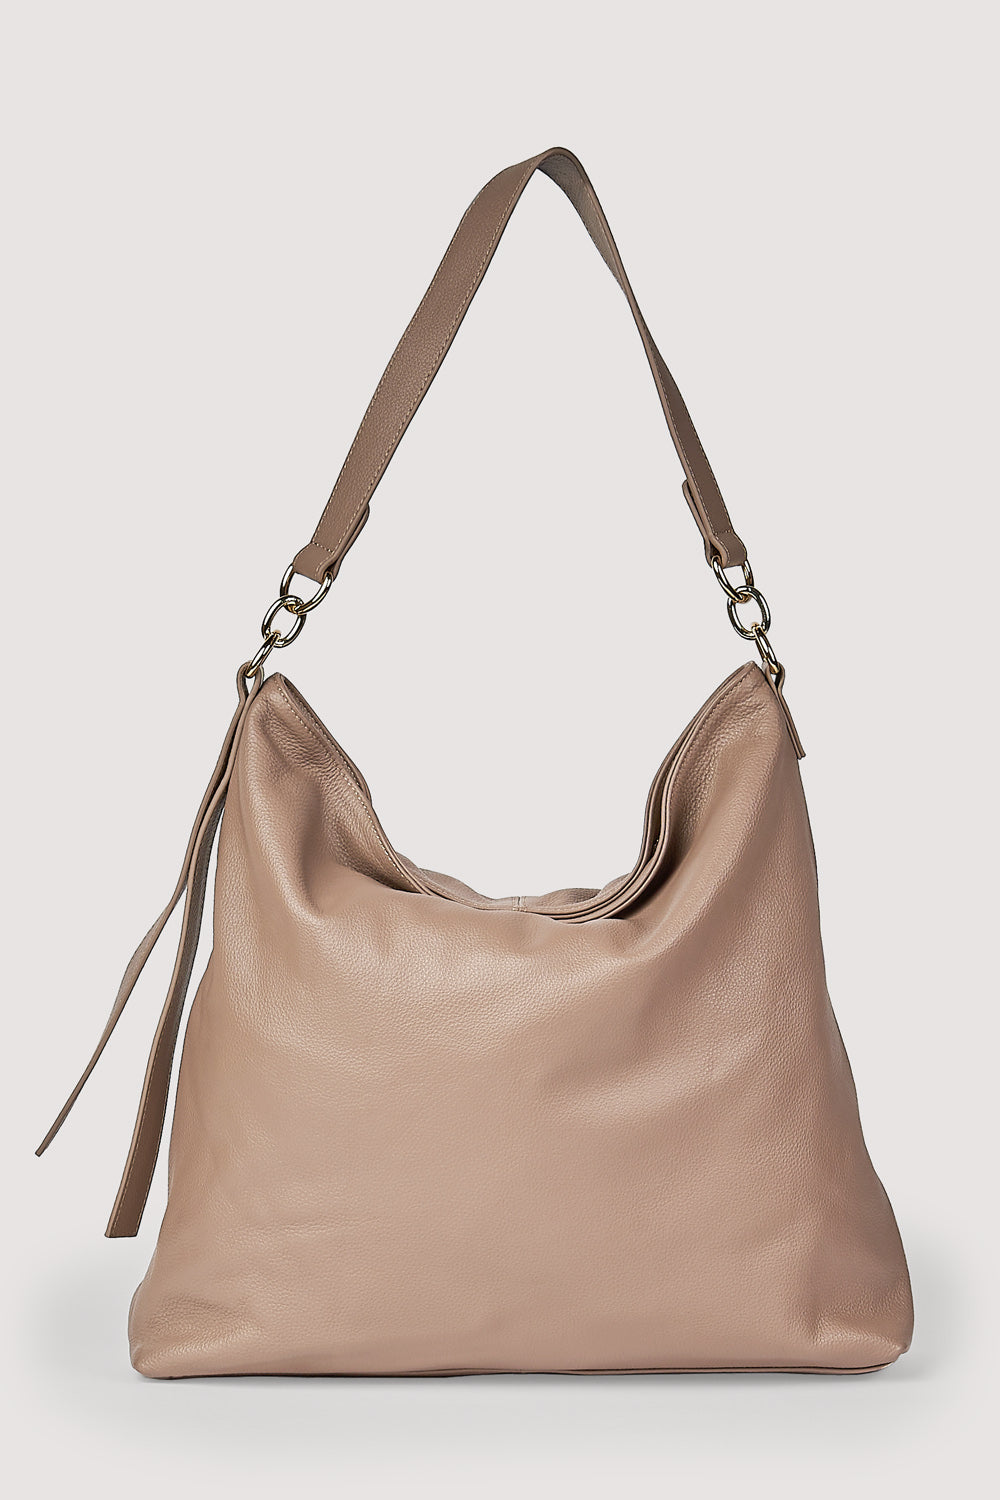 Amazon.com: Denim Shoulder Bag Casual Tote Bag Large Hobo Handbag Jean Purse  for Women (A-Dark Blue) : Clothing, Shoes & Jewelry